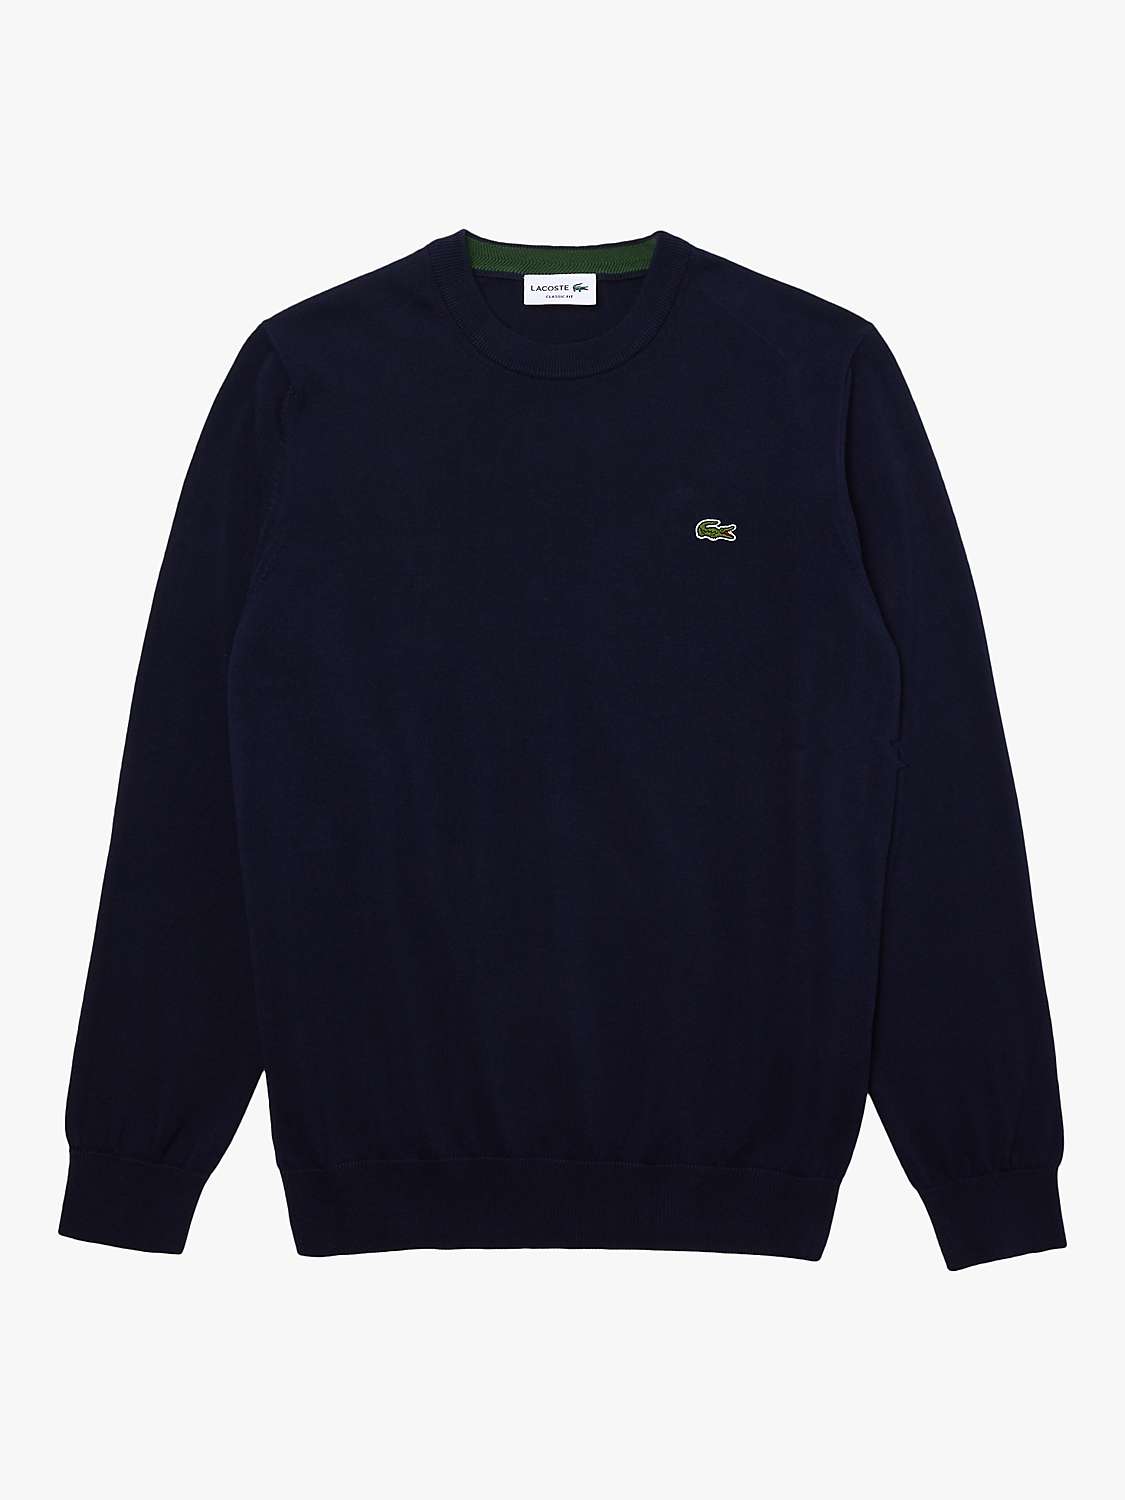 Lacoste Classic Cotton Sweatshirt, Navy at John Lewis & Partners